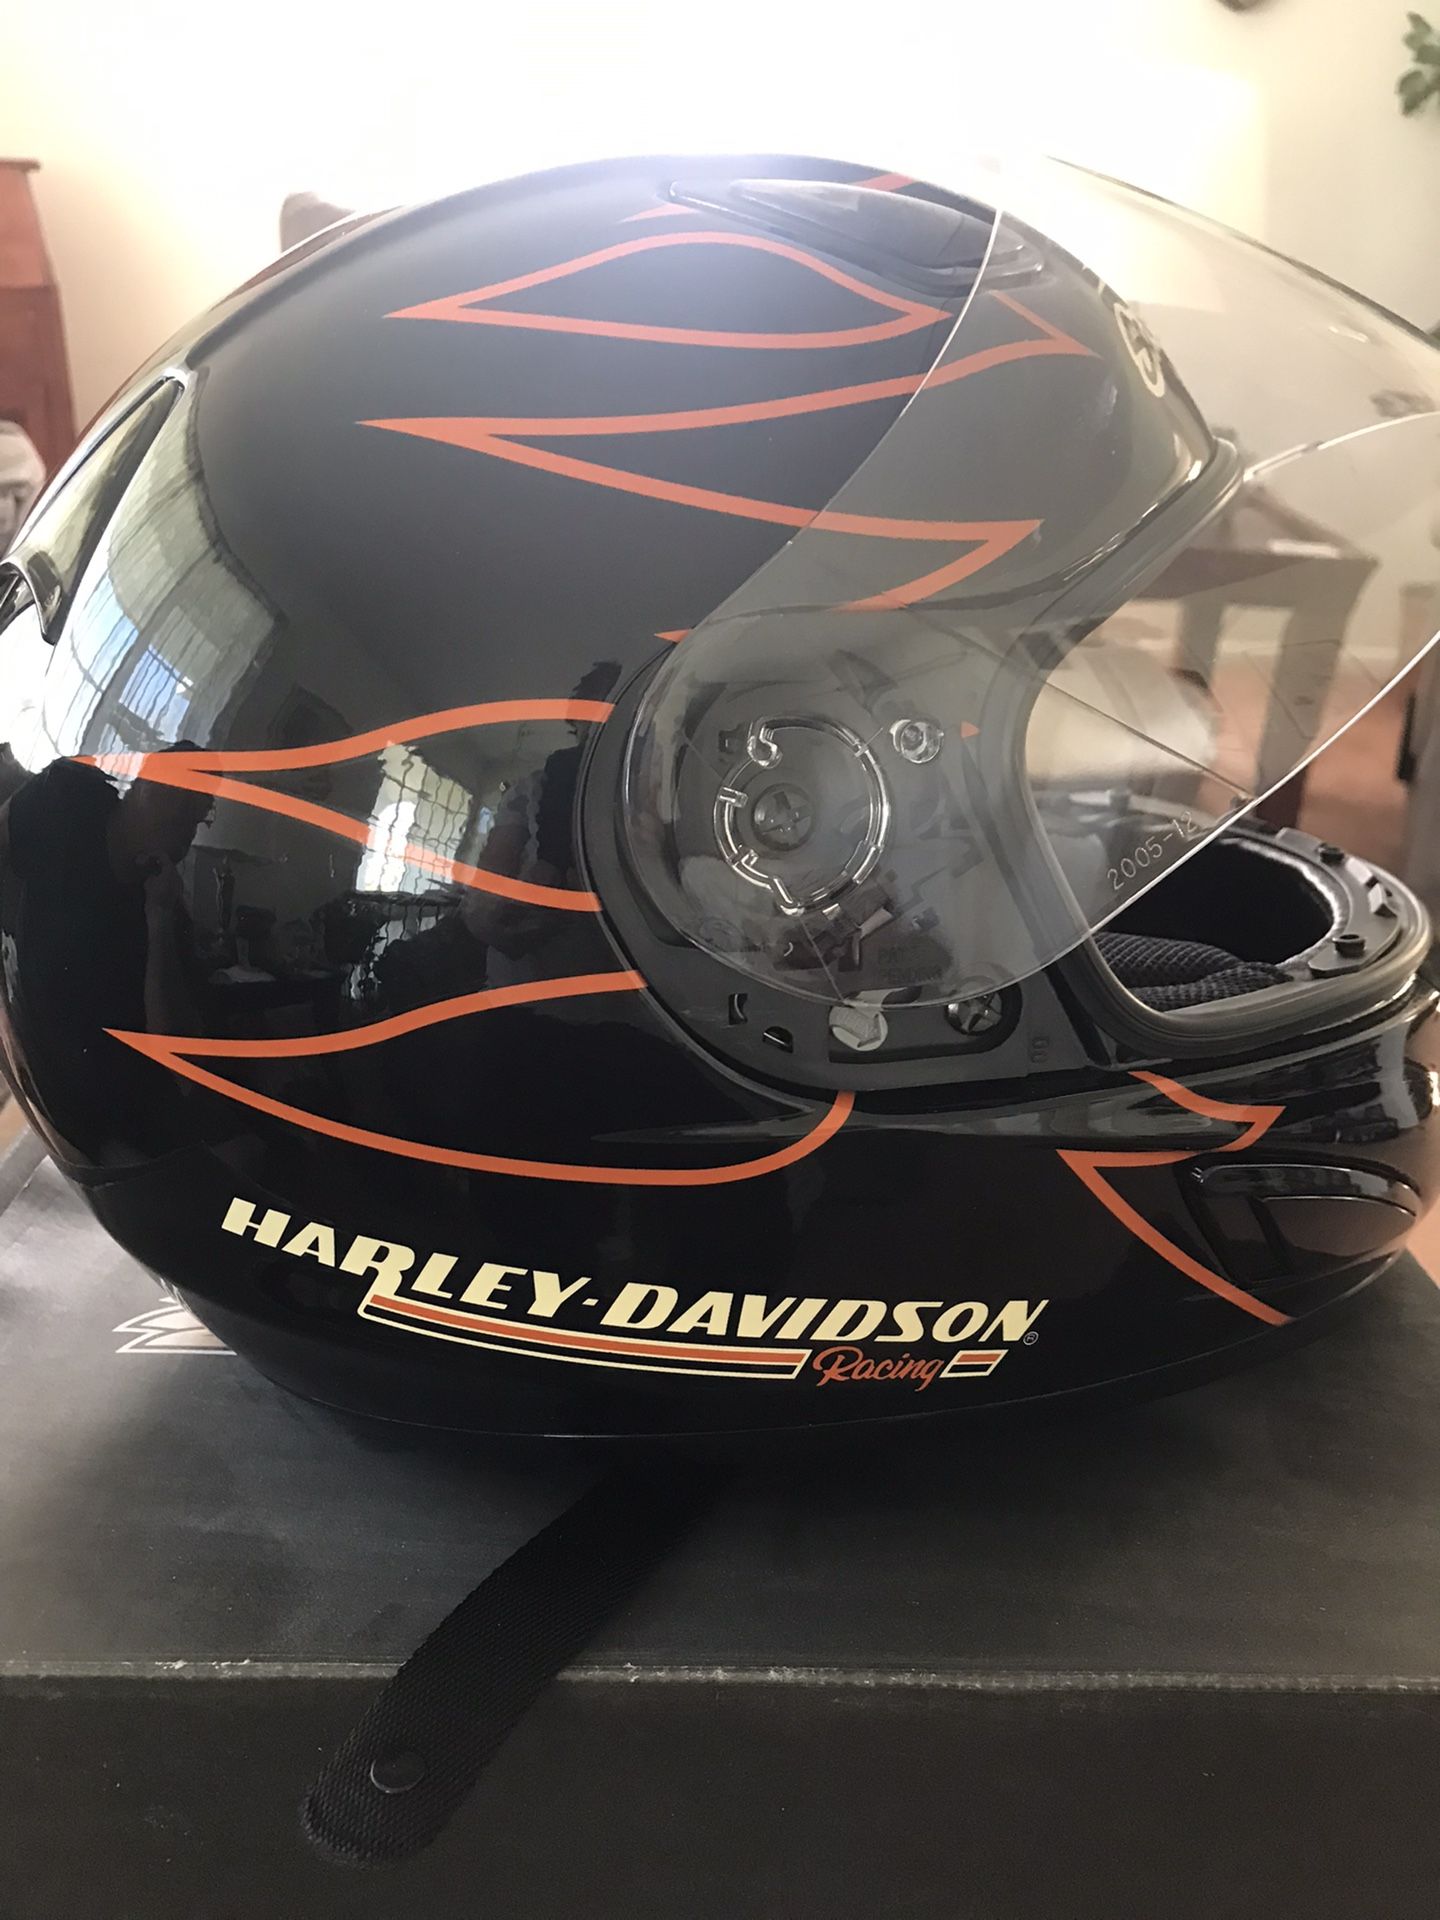 Snell Harley Davidson Helmet